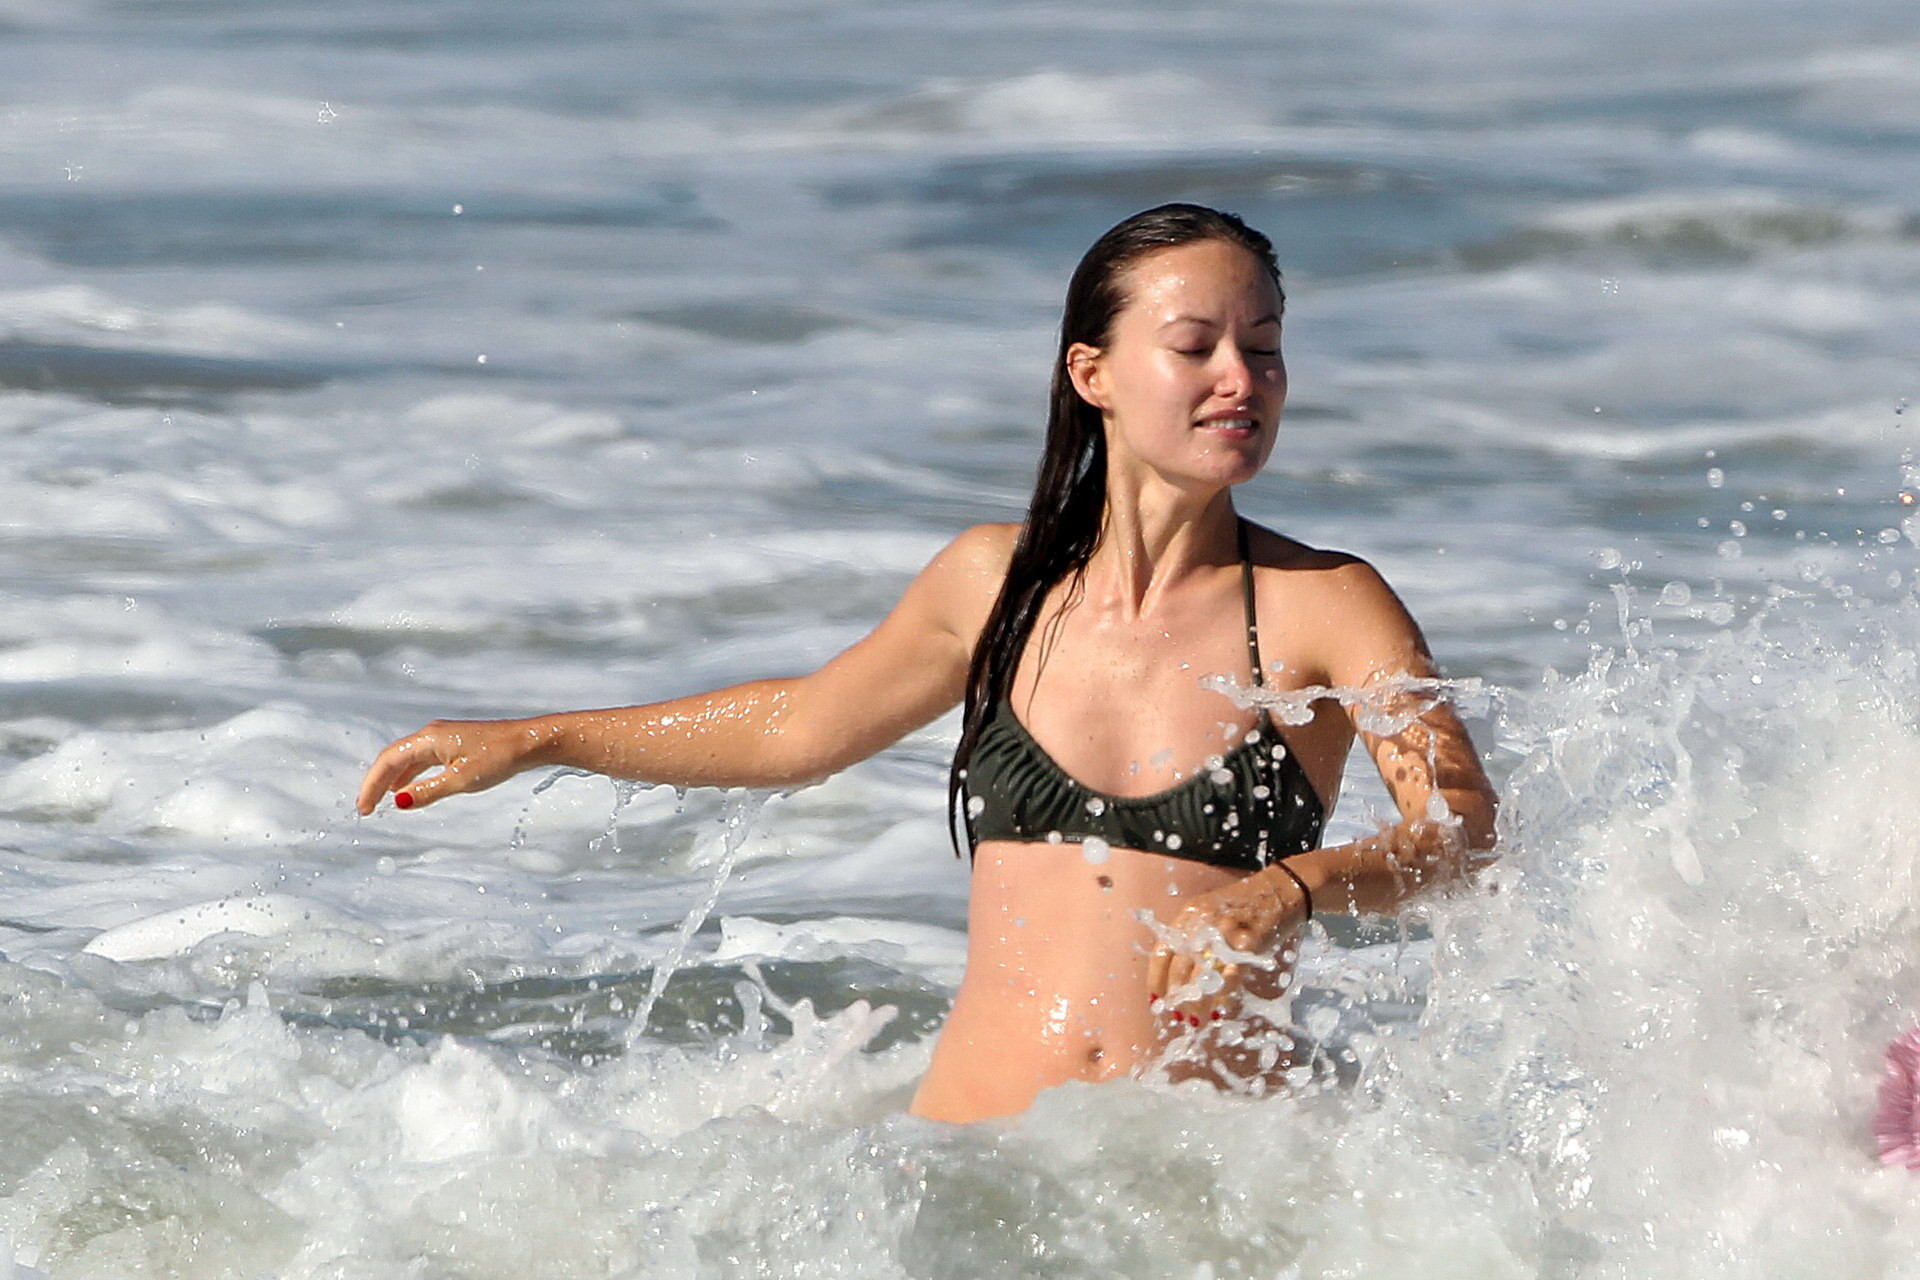 Olivia Wilde se ve muy sexy en bikini mojado en la playa
 #75335298